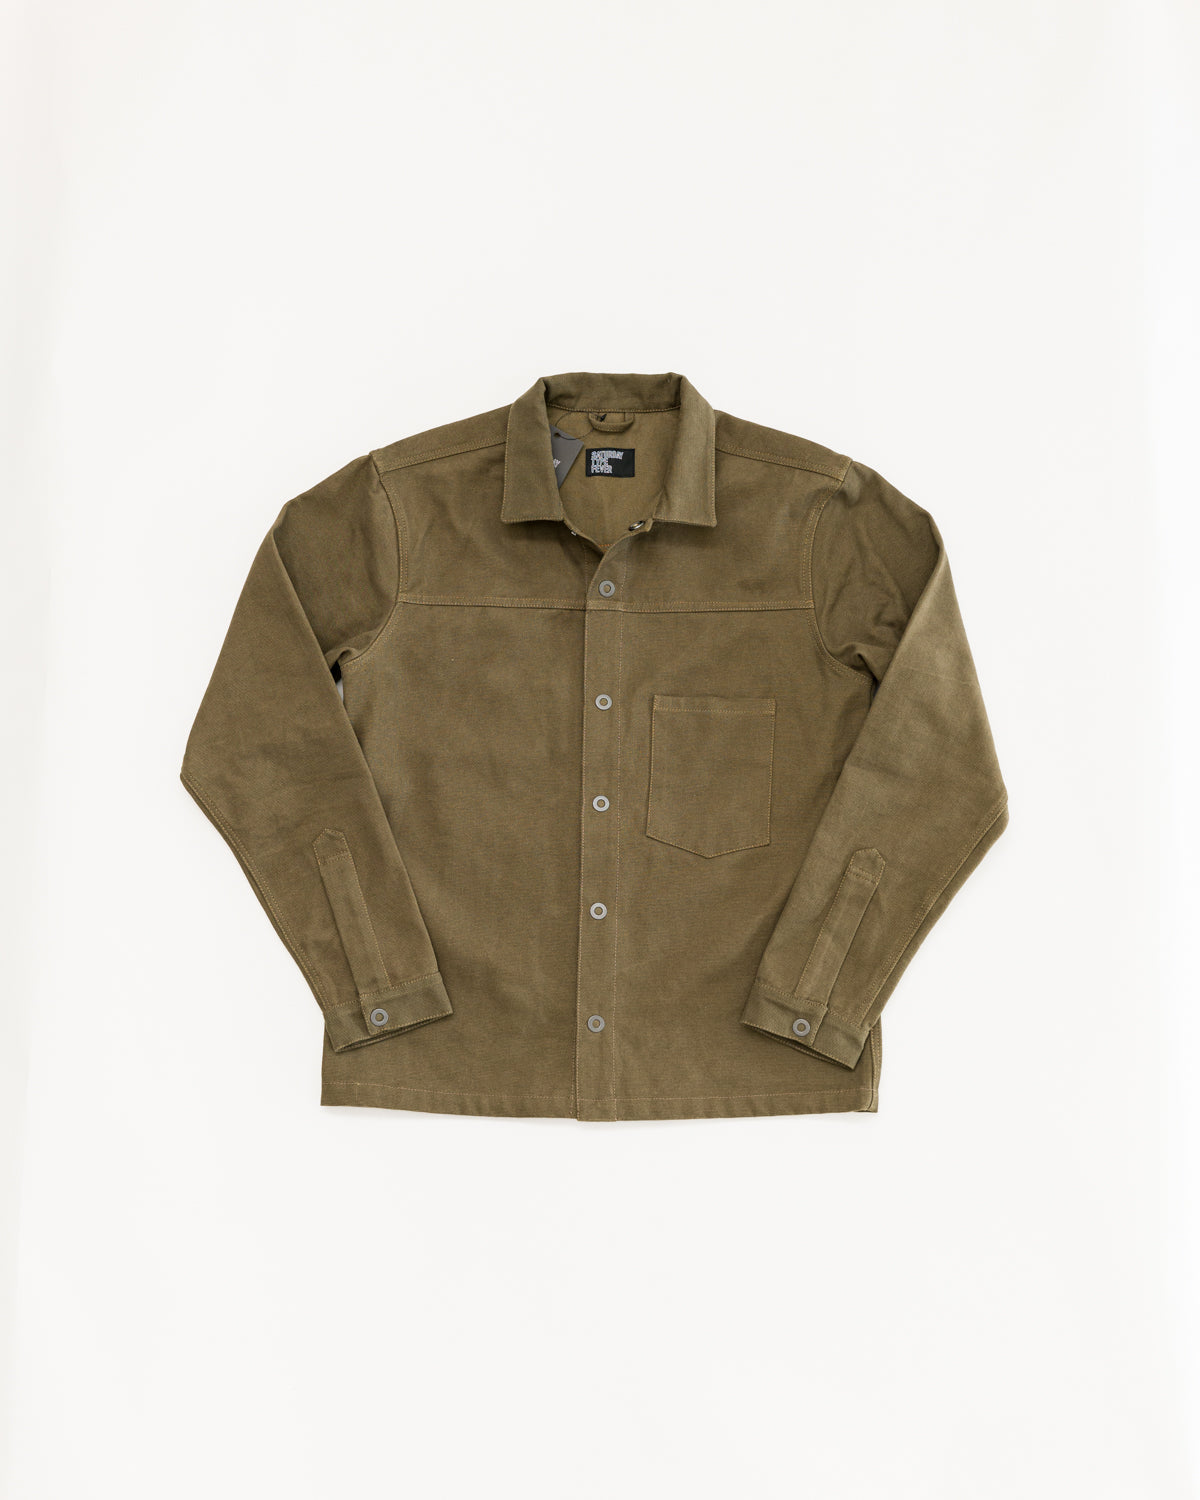 STF-BRO71 - 9oz Olive Cotton Shirt - Brother71